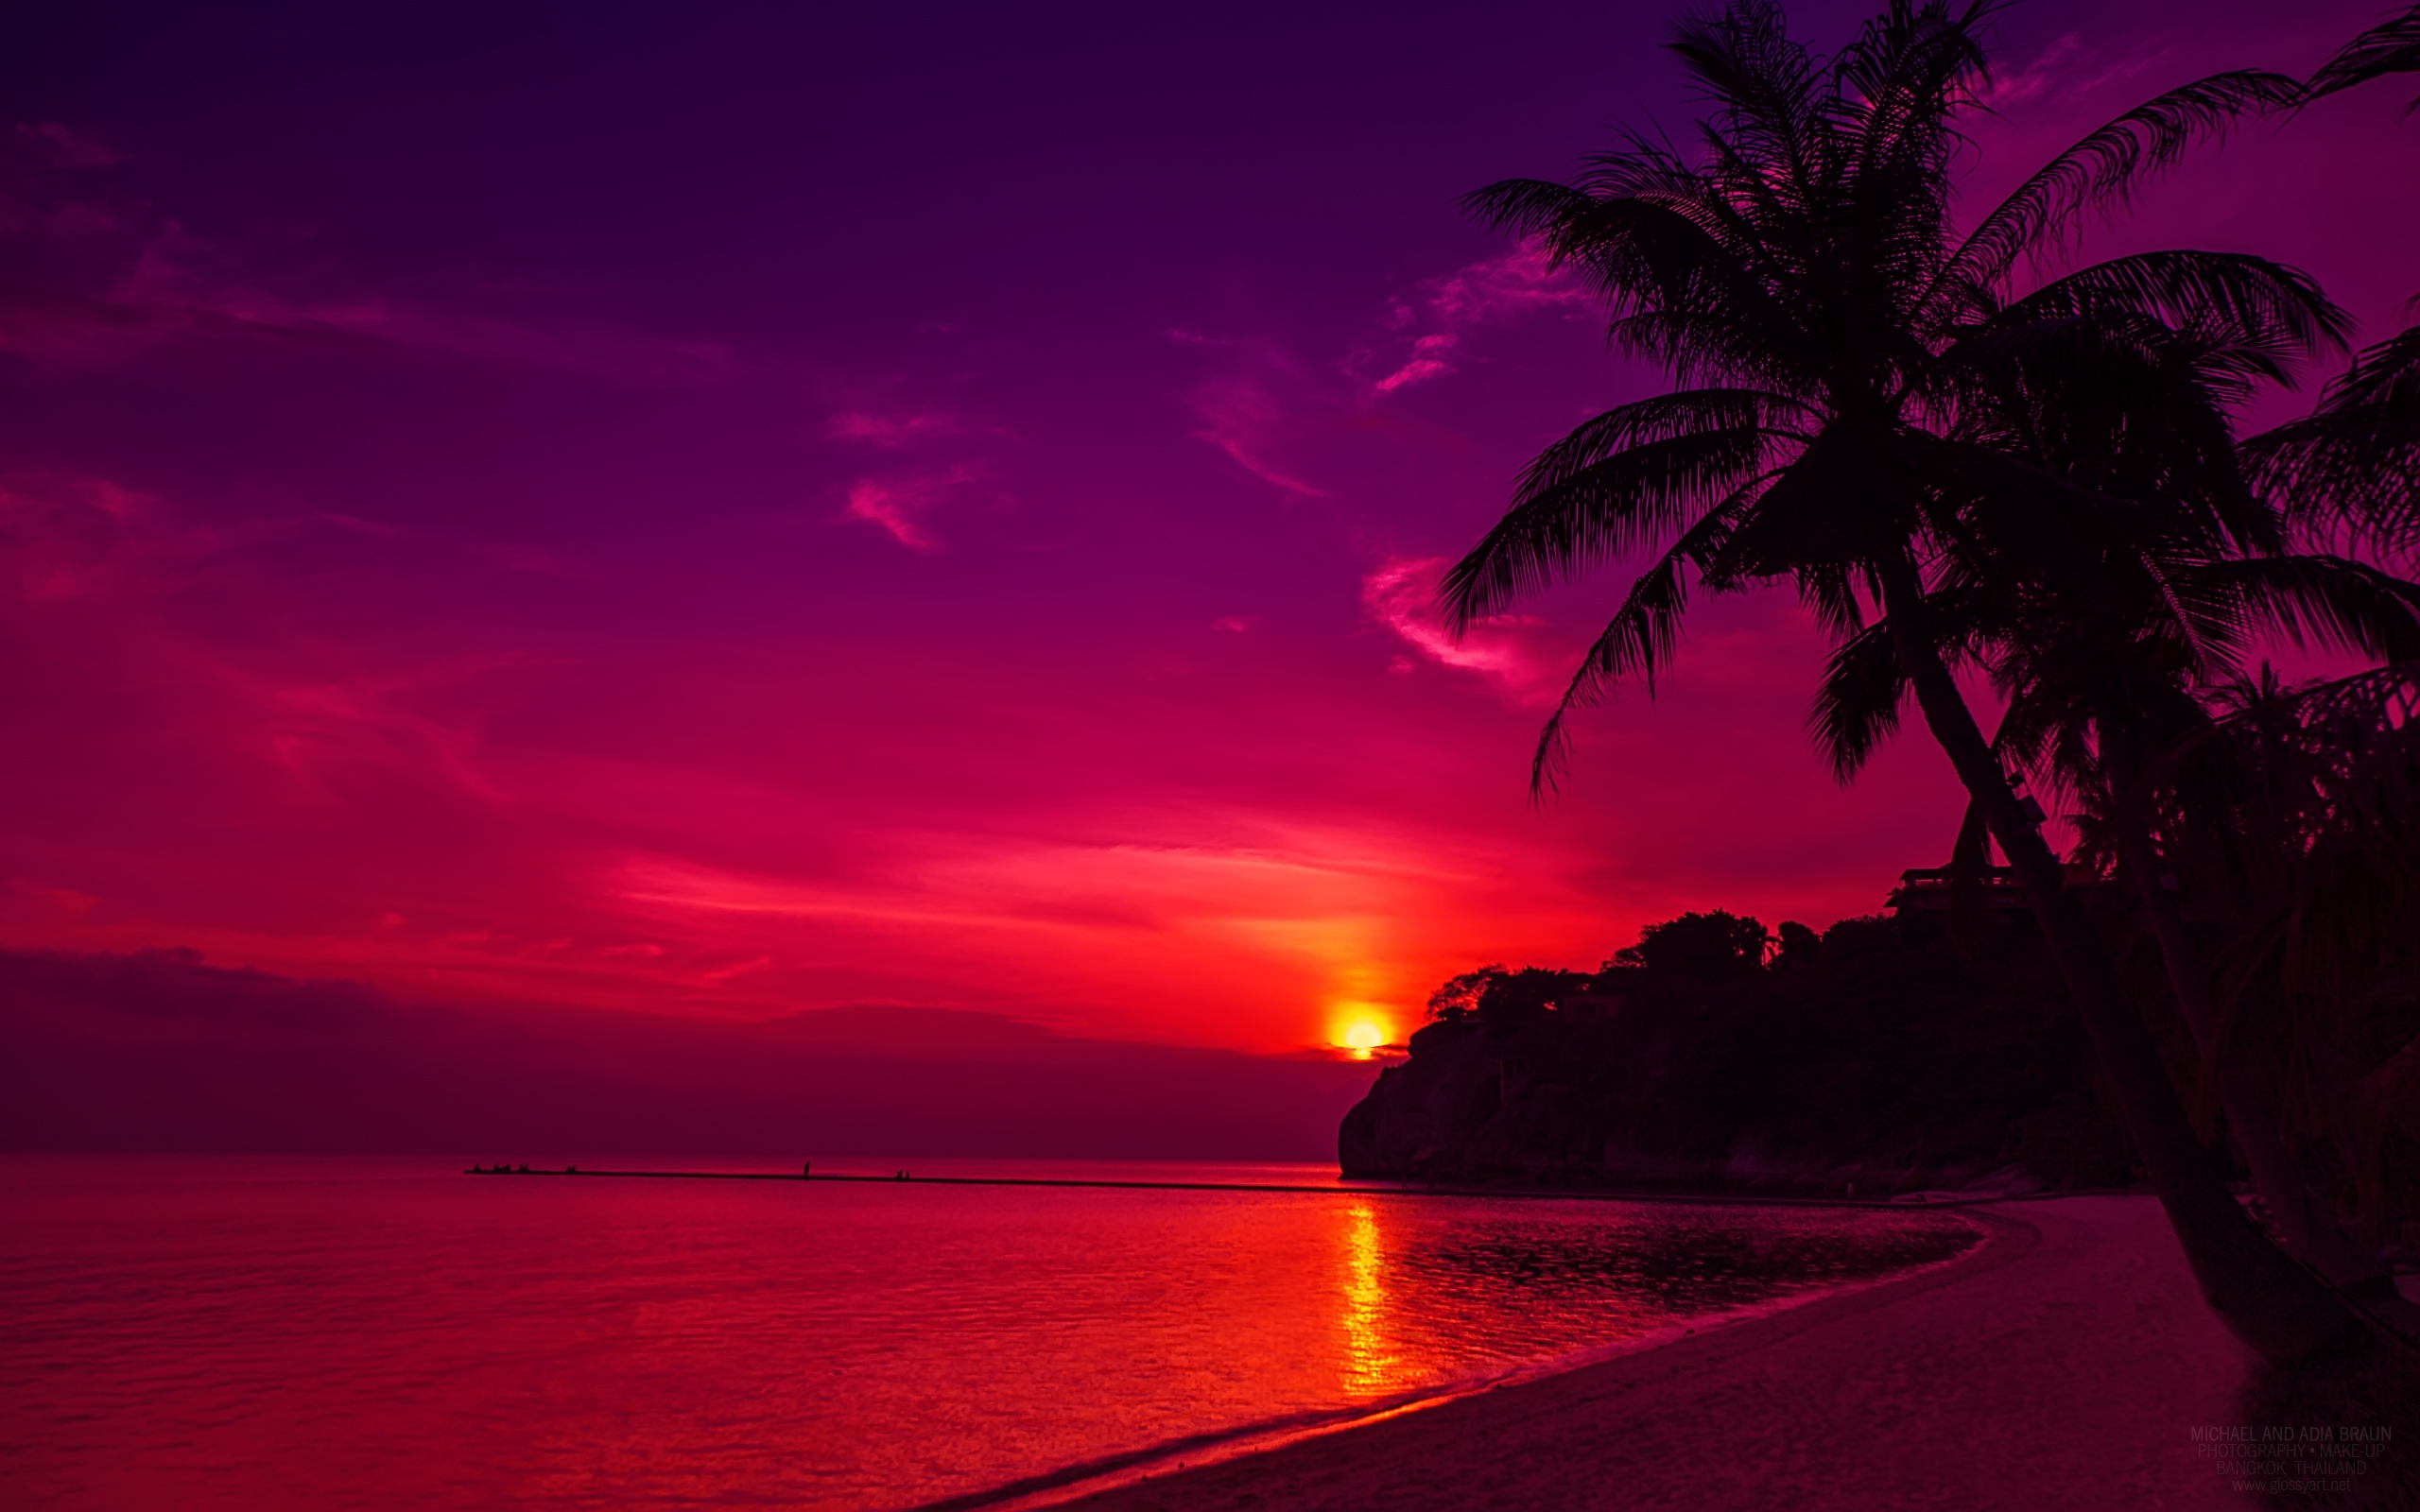 69+] Beach Sunset Backgrounds - WallpaperSafari